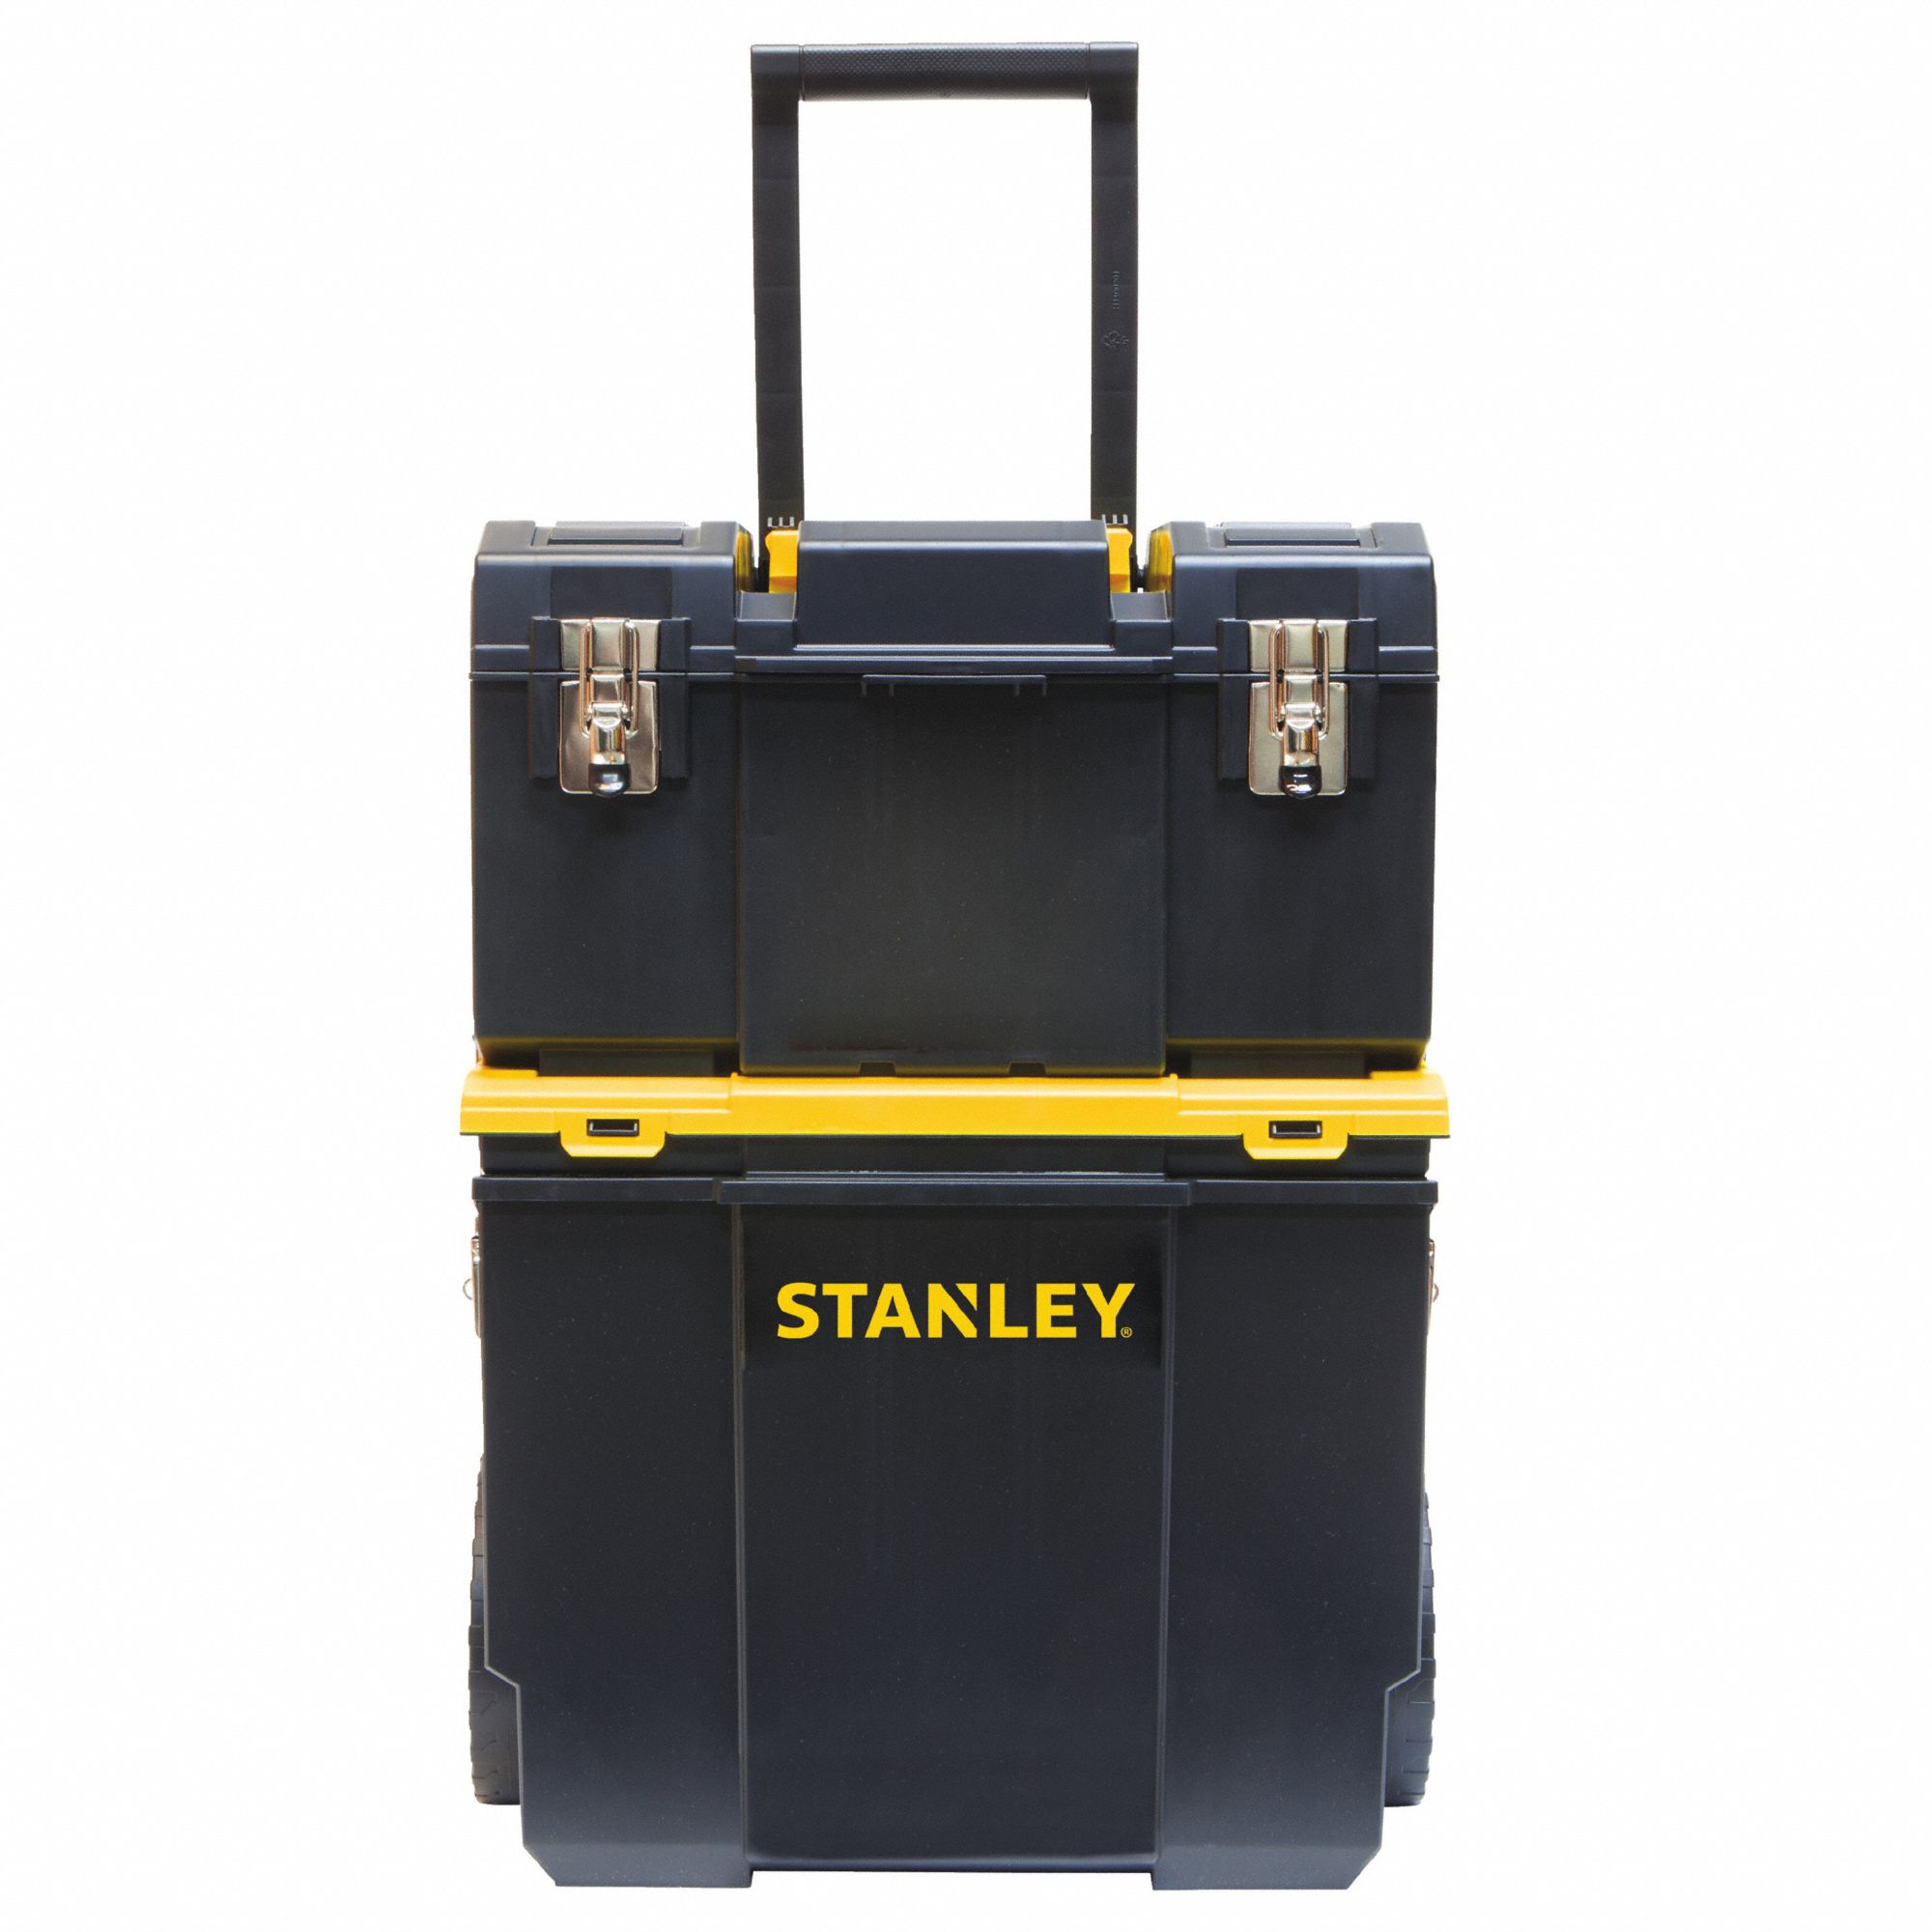 Boite à outils Stanley - réf. 1-95-618 - Rubix